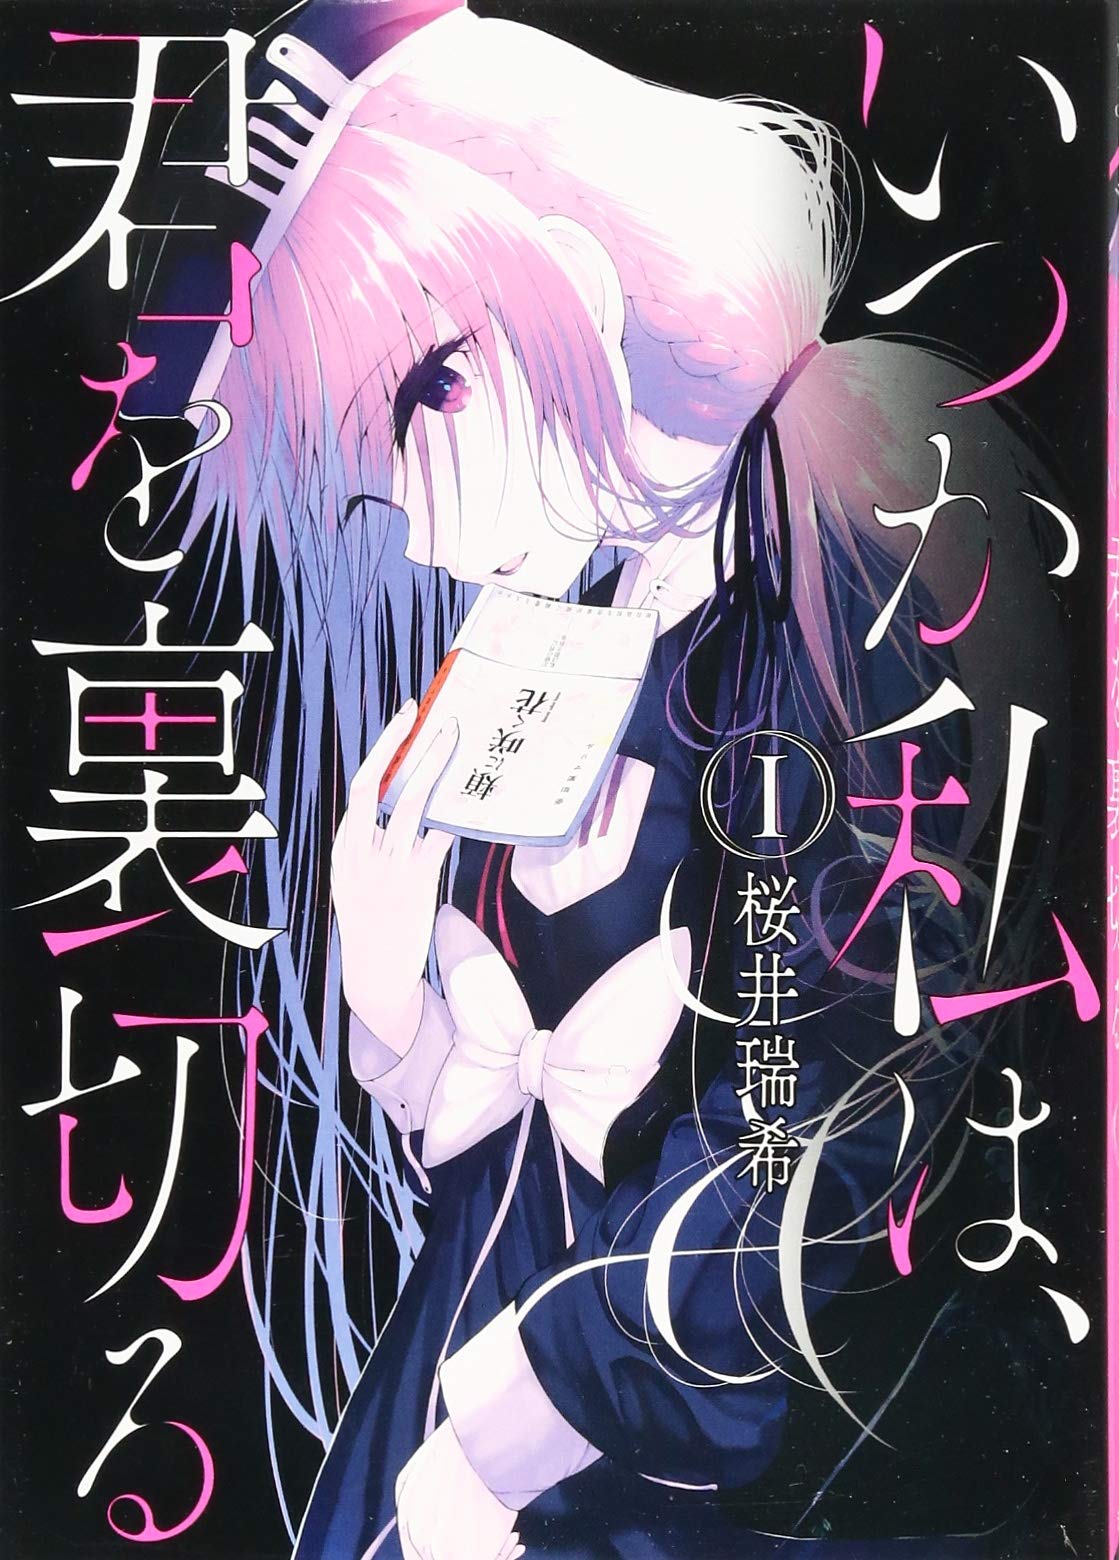 Manga Volume 2, Kimi no Na wa. Wiki